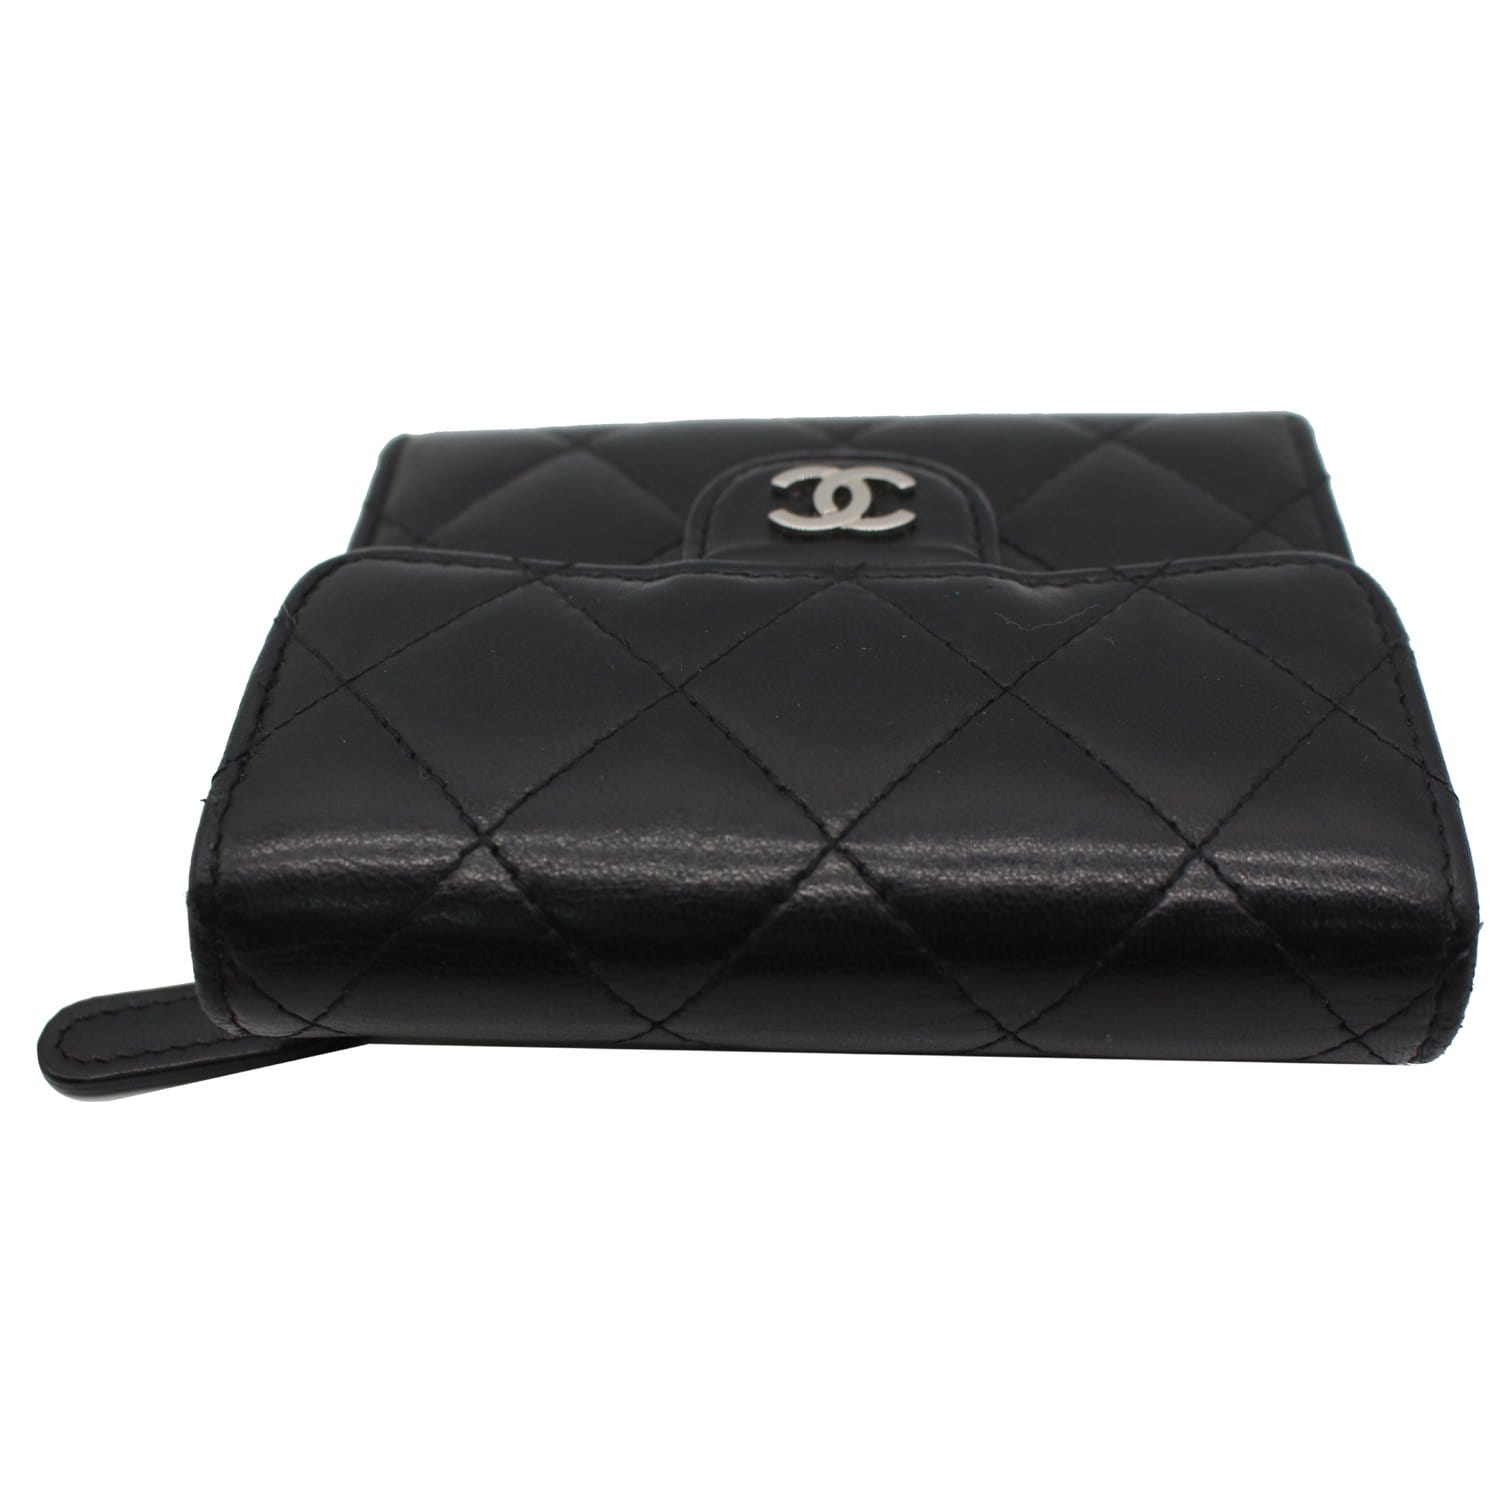 CHANEL - Black lambskin leather wallet, front clip flap …